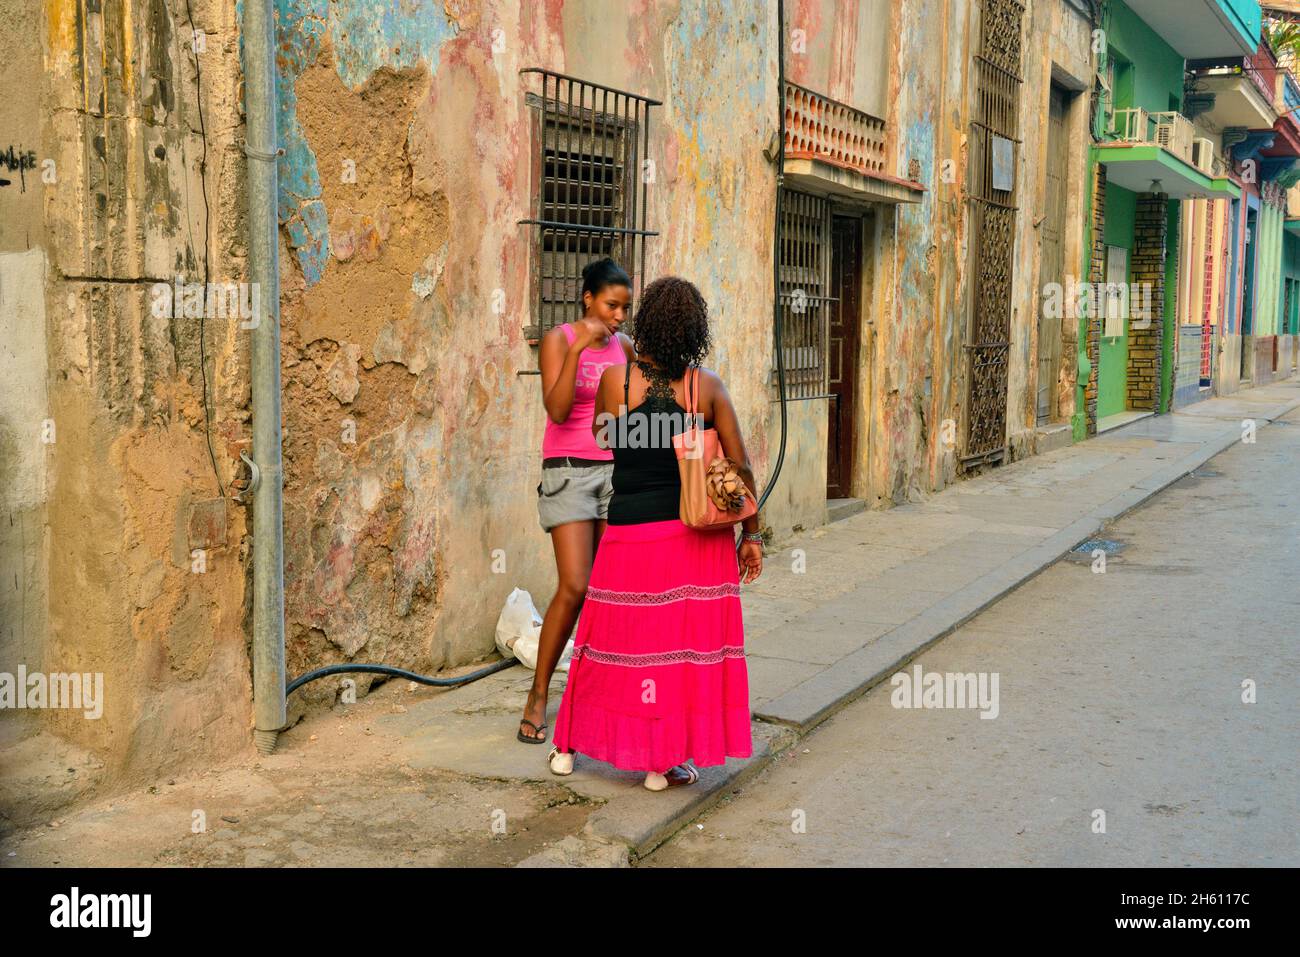 Street scene in central Havana.  Two ladies conversing on the street, La Habana (Havana), Habana, Cuba Stock Photo